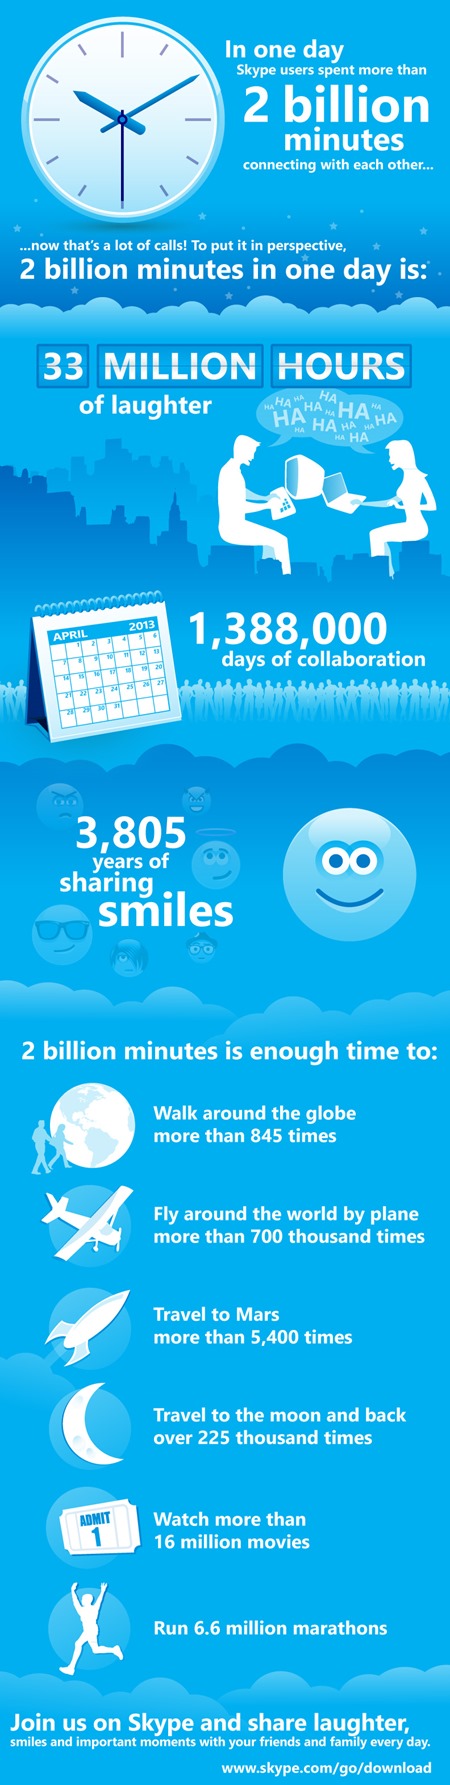 Skype 突破重要里程碑：日通话时间 20 亿分钟